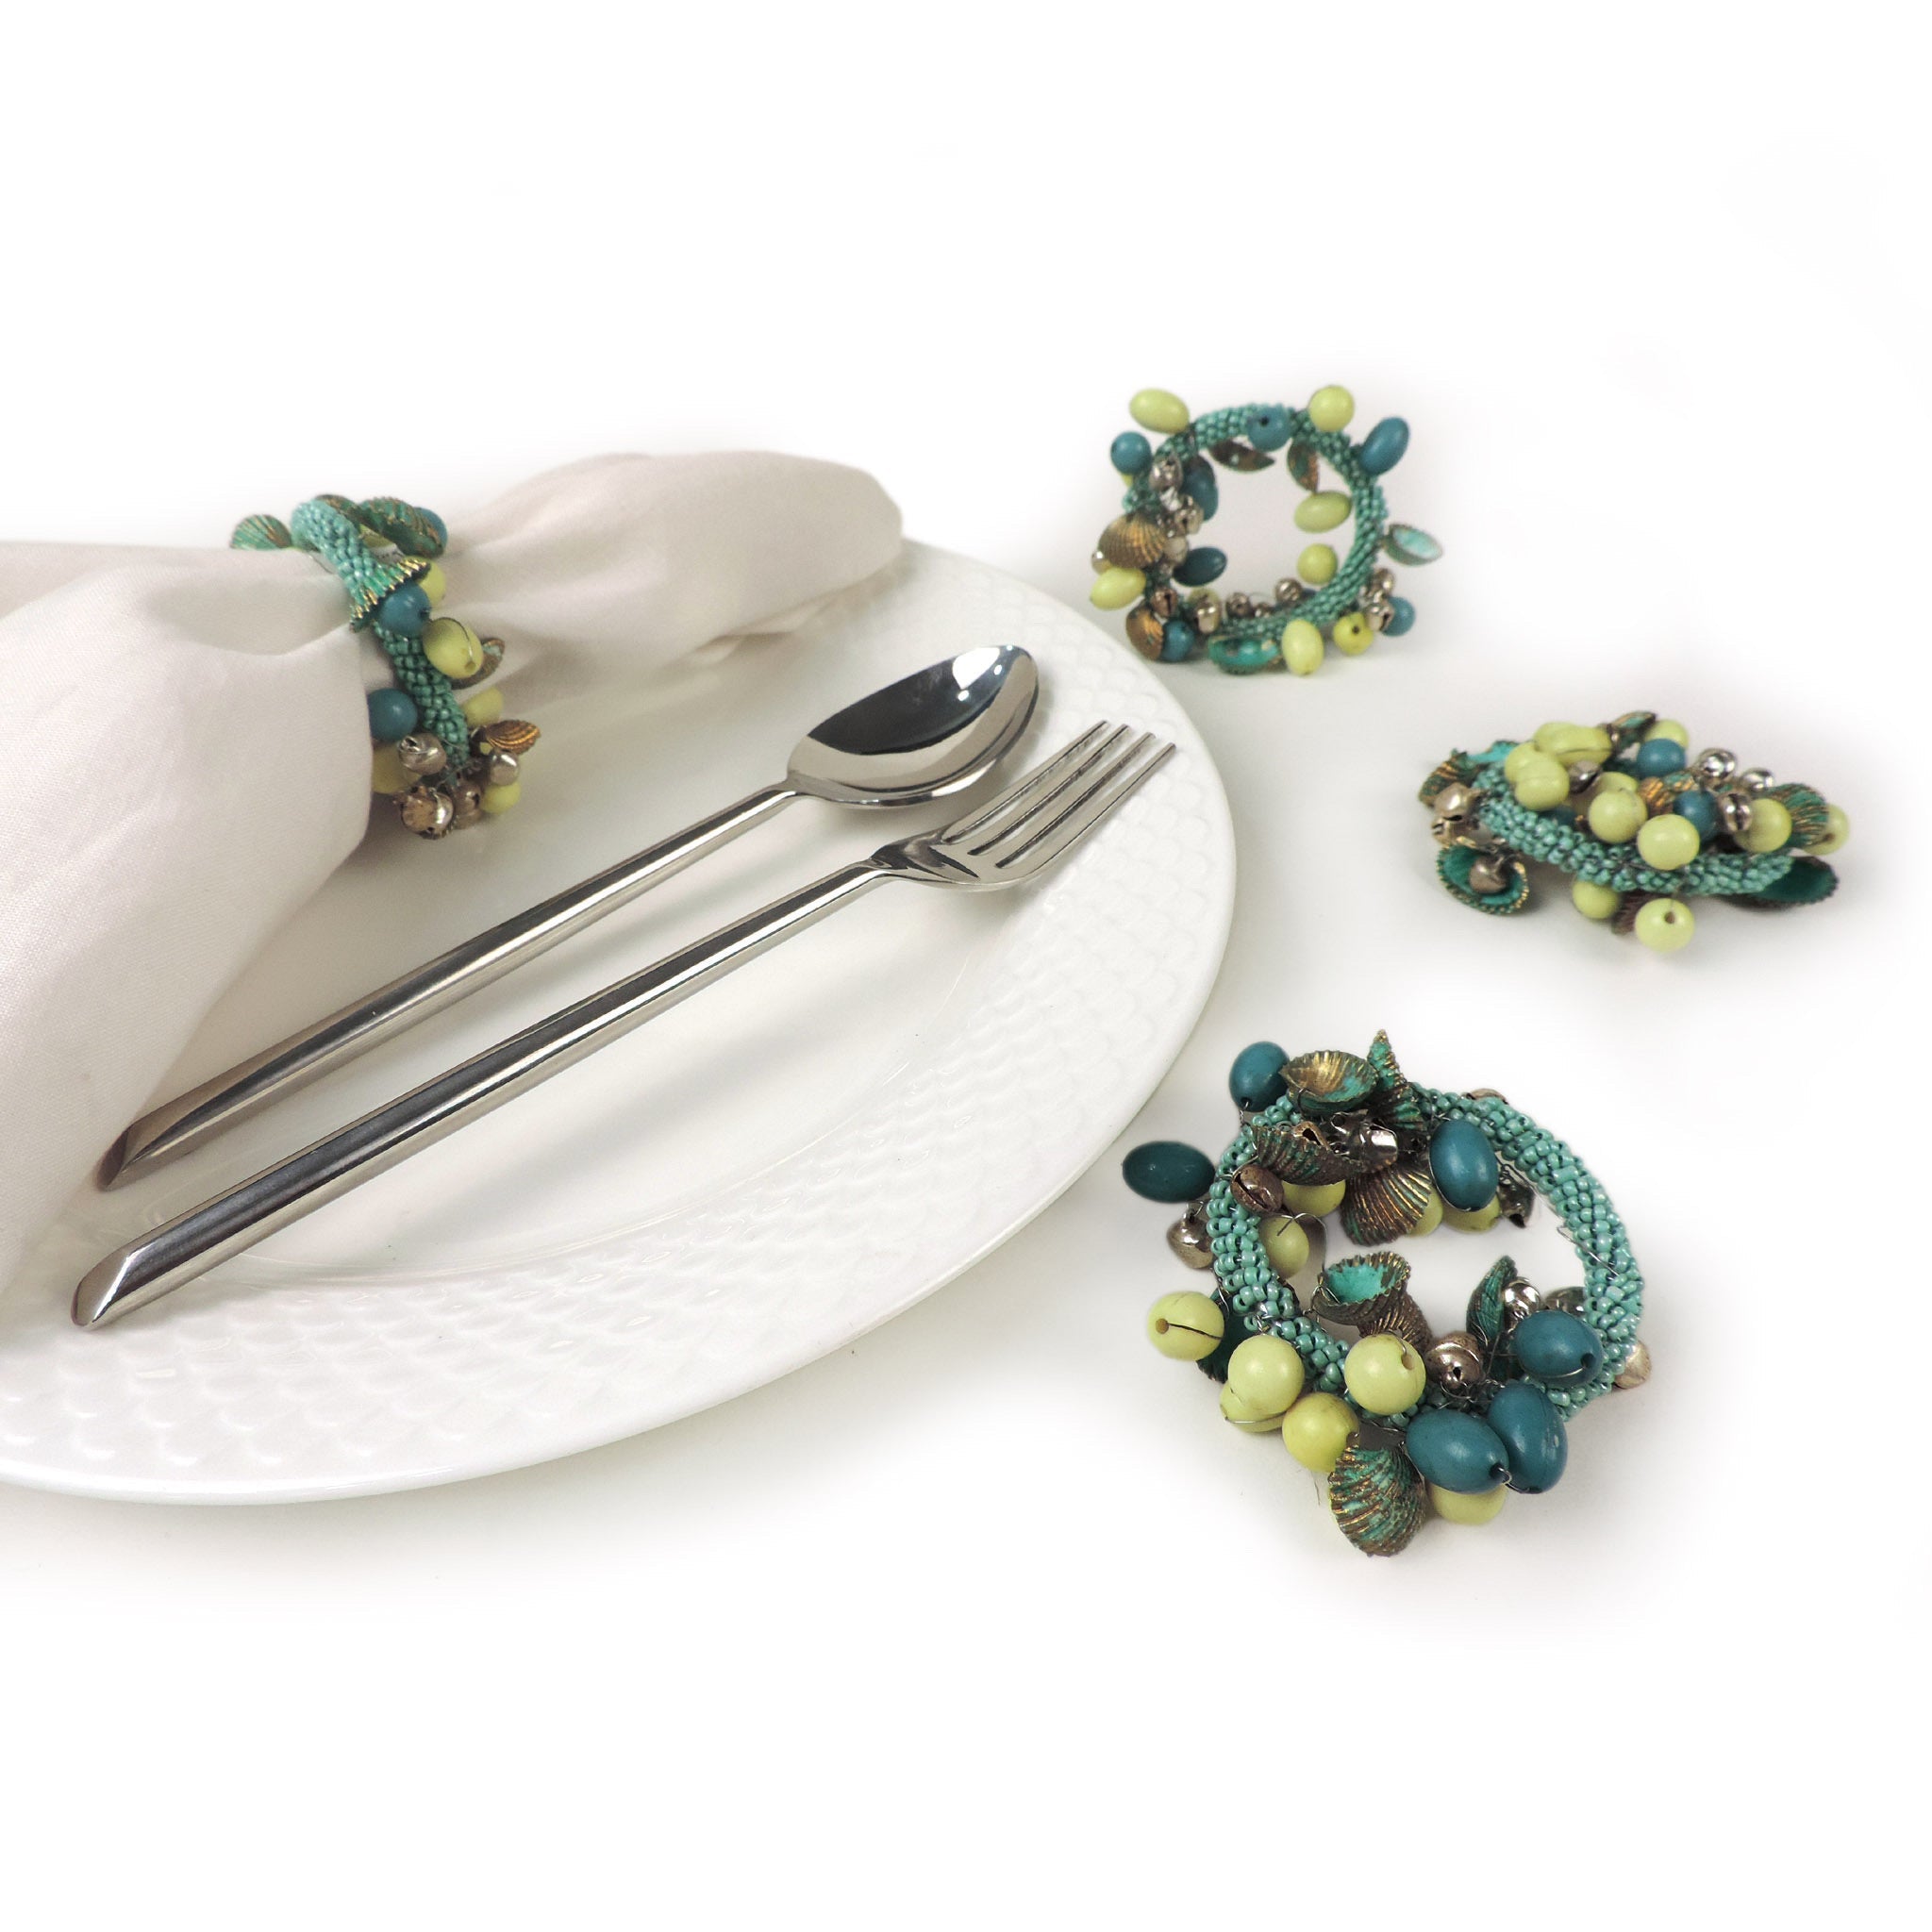 Boho Shell & Bead Napkin Ring in Turquoise, Set of 4